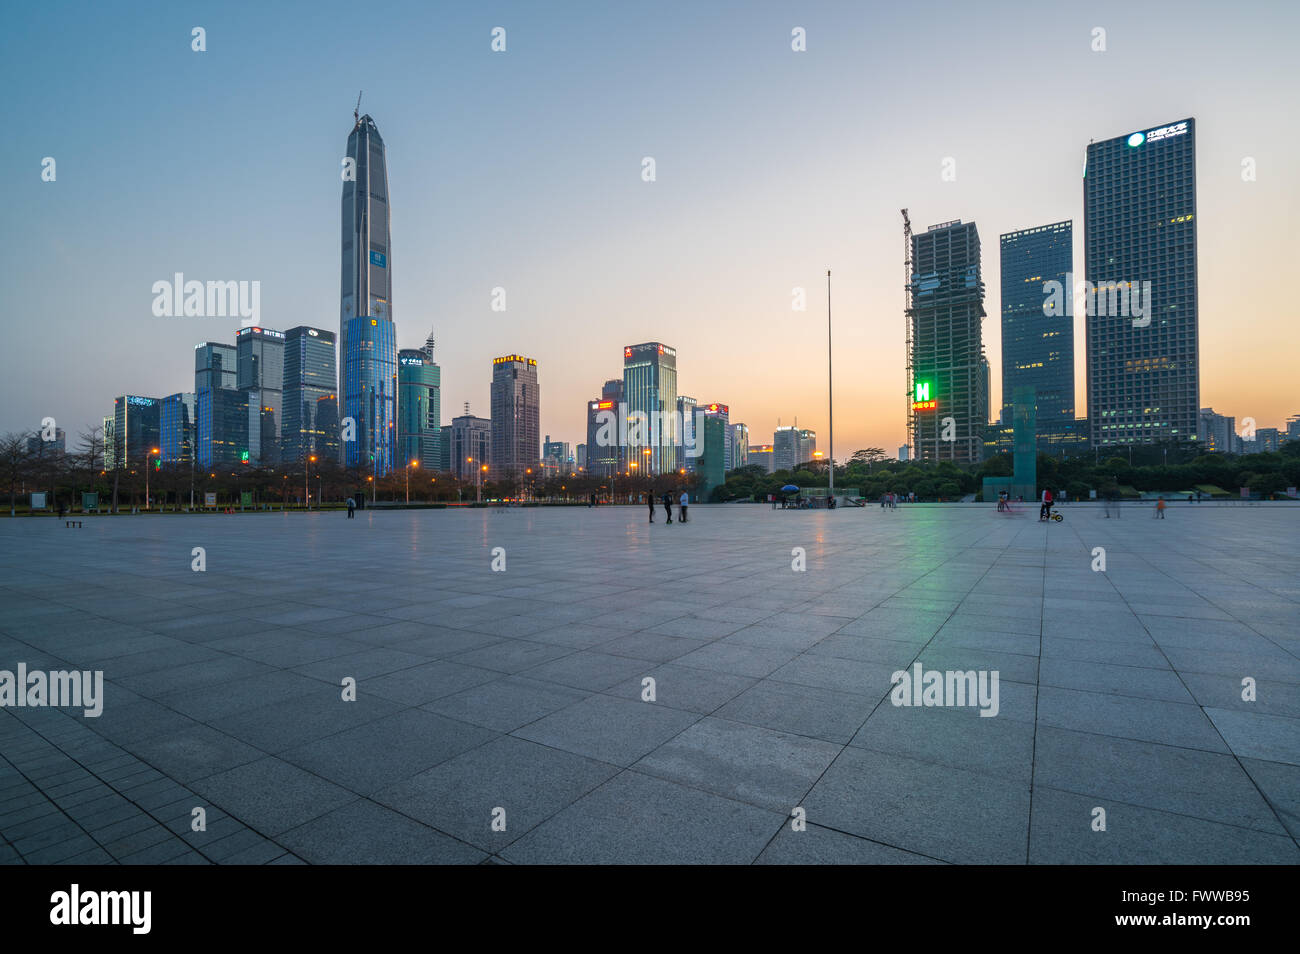 Shenzhen skyline in the civil center square Stock Photo